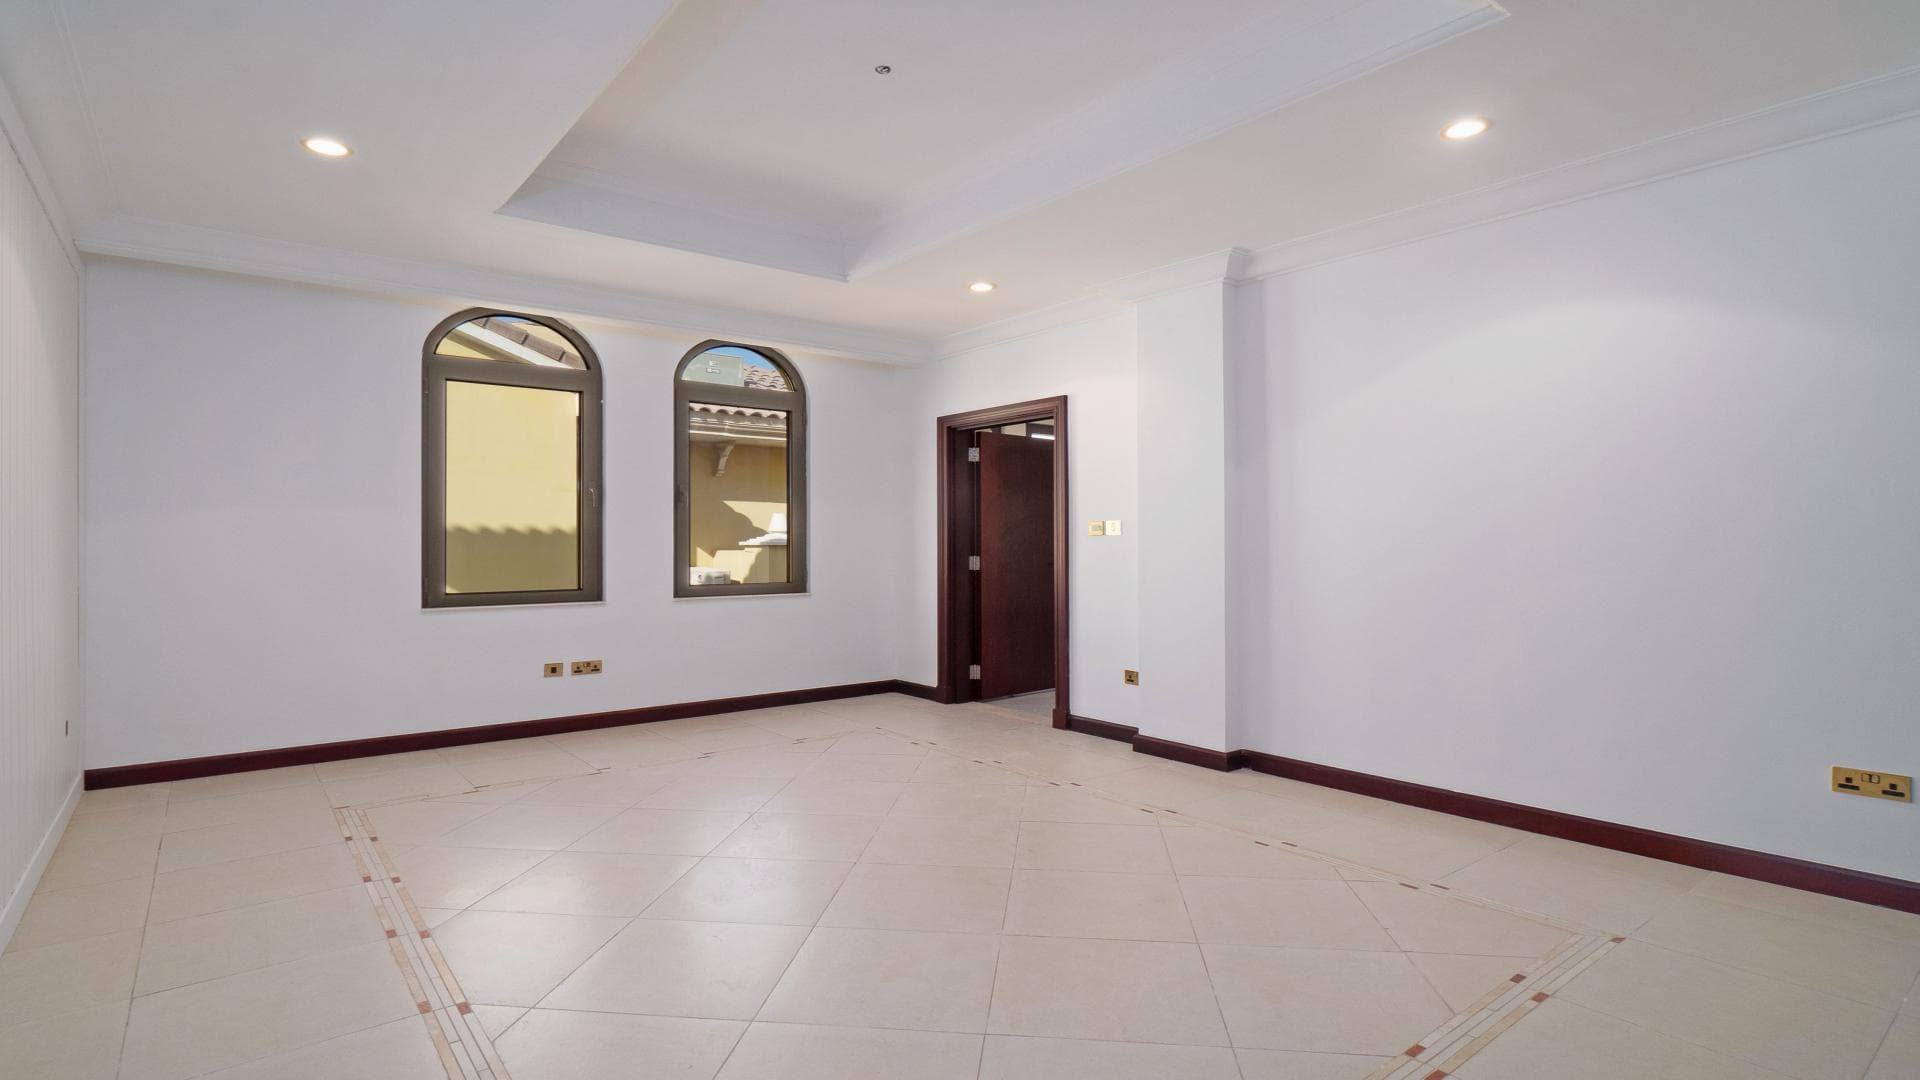 5 Bedroom Villa For Sale Mughal Lp36445 2487c3d7e044c200.jpg